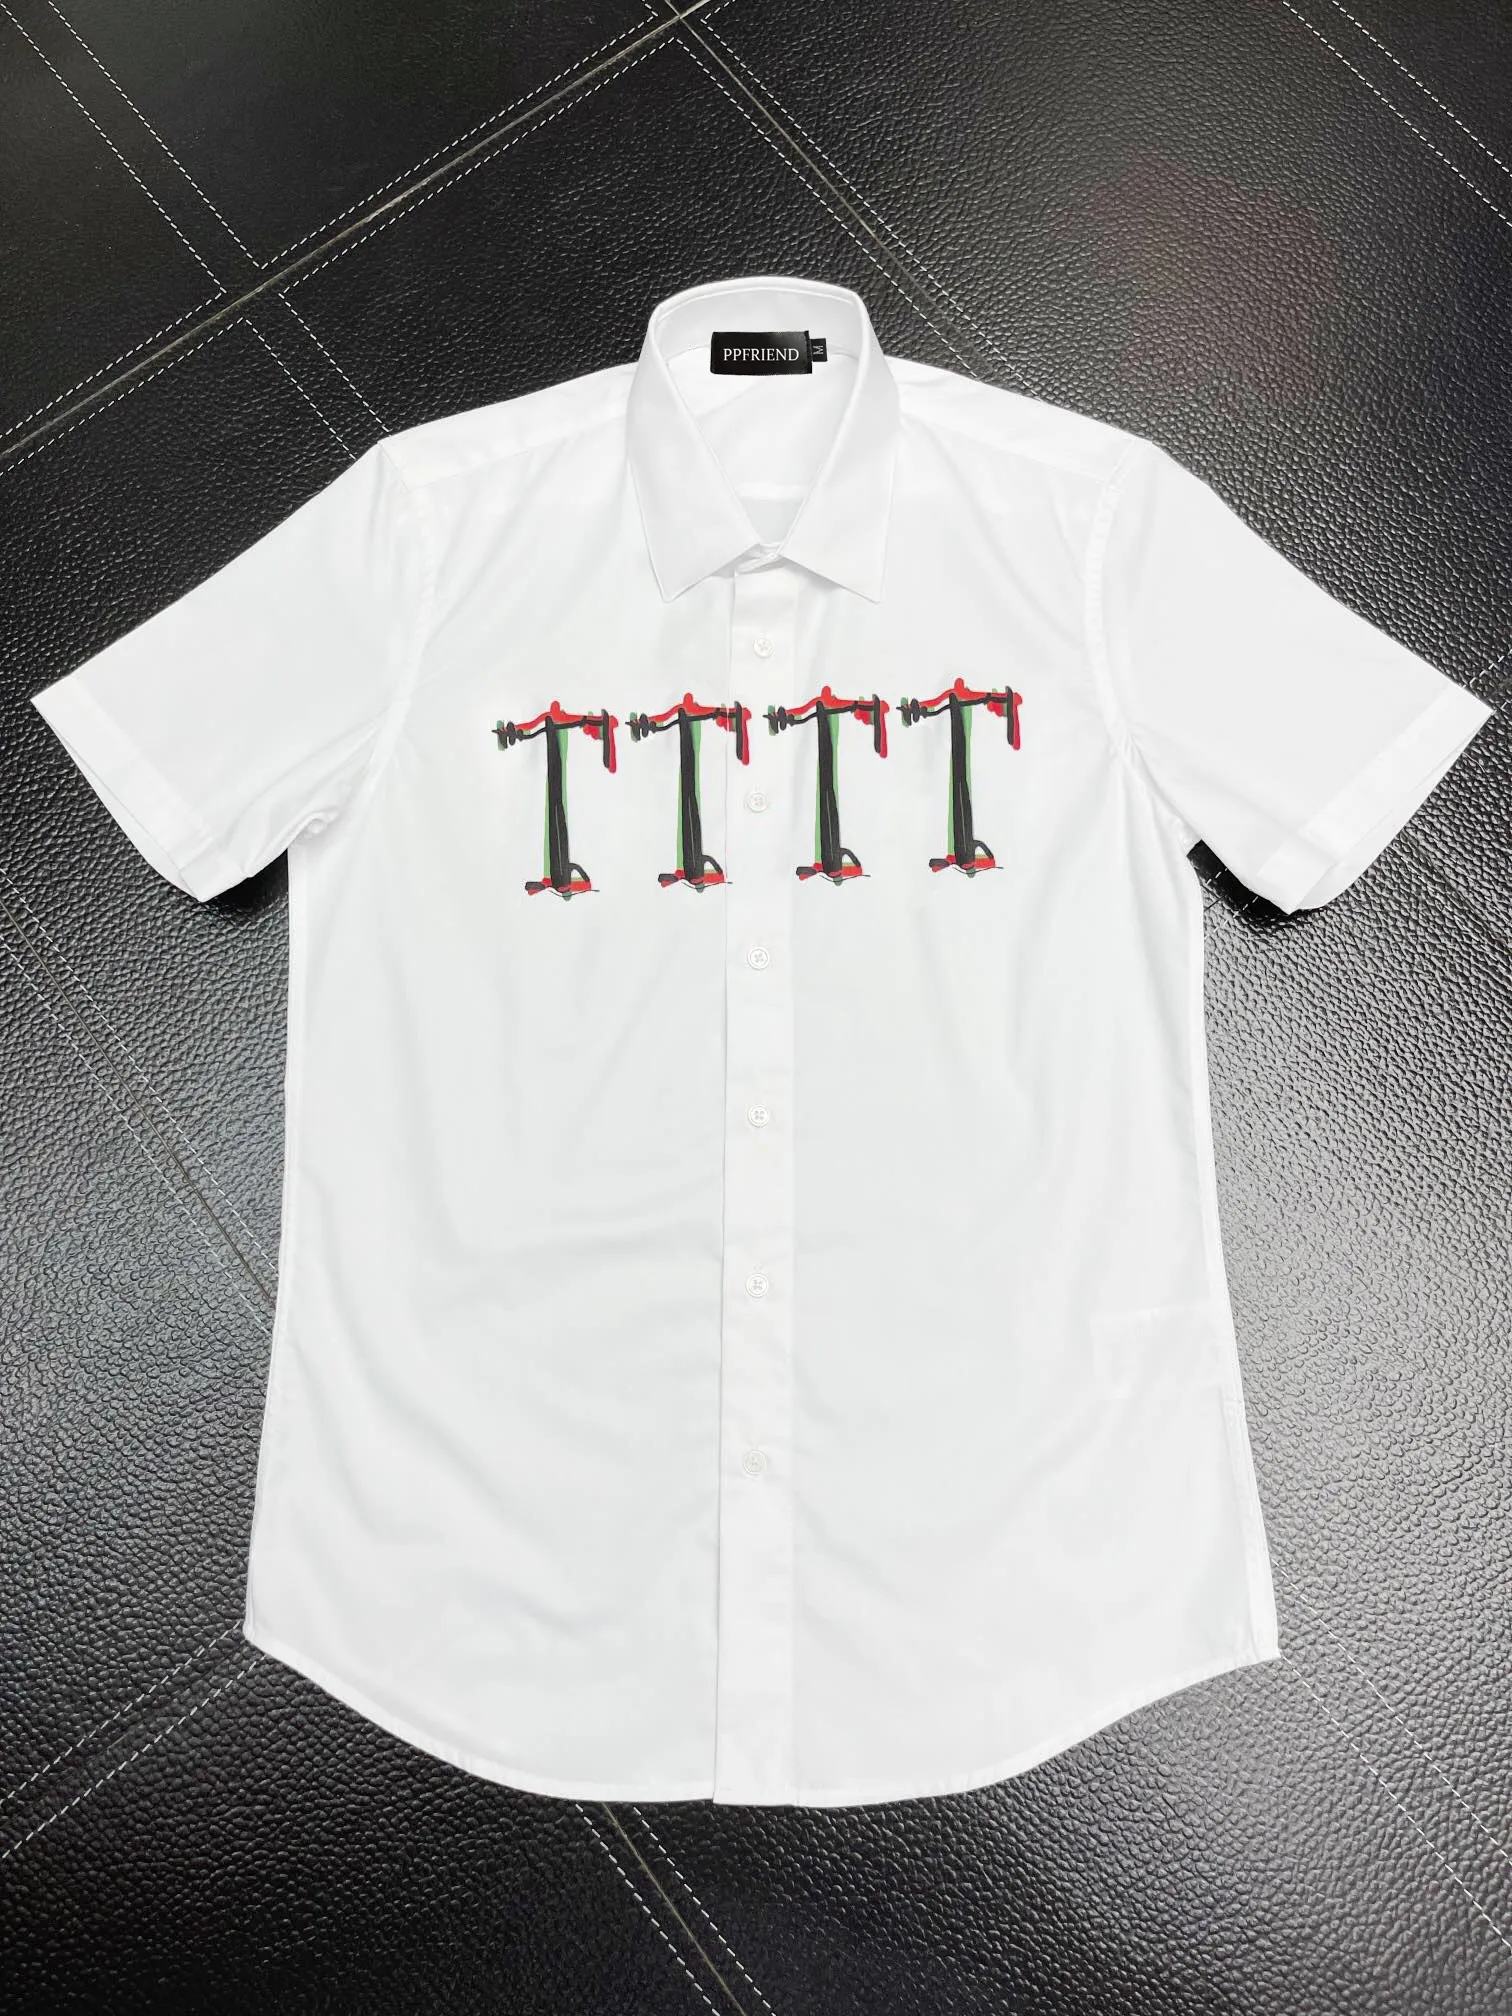 Fair Isle Thunderbolt Shirt Herren Designerhemden Markenkleidung Herren Kurzarmhemd Hip Hop Style Hochwertige Baumwolloberteile 10644